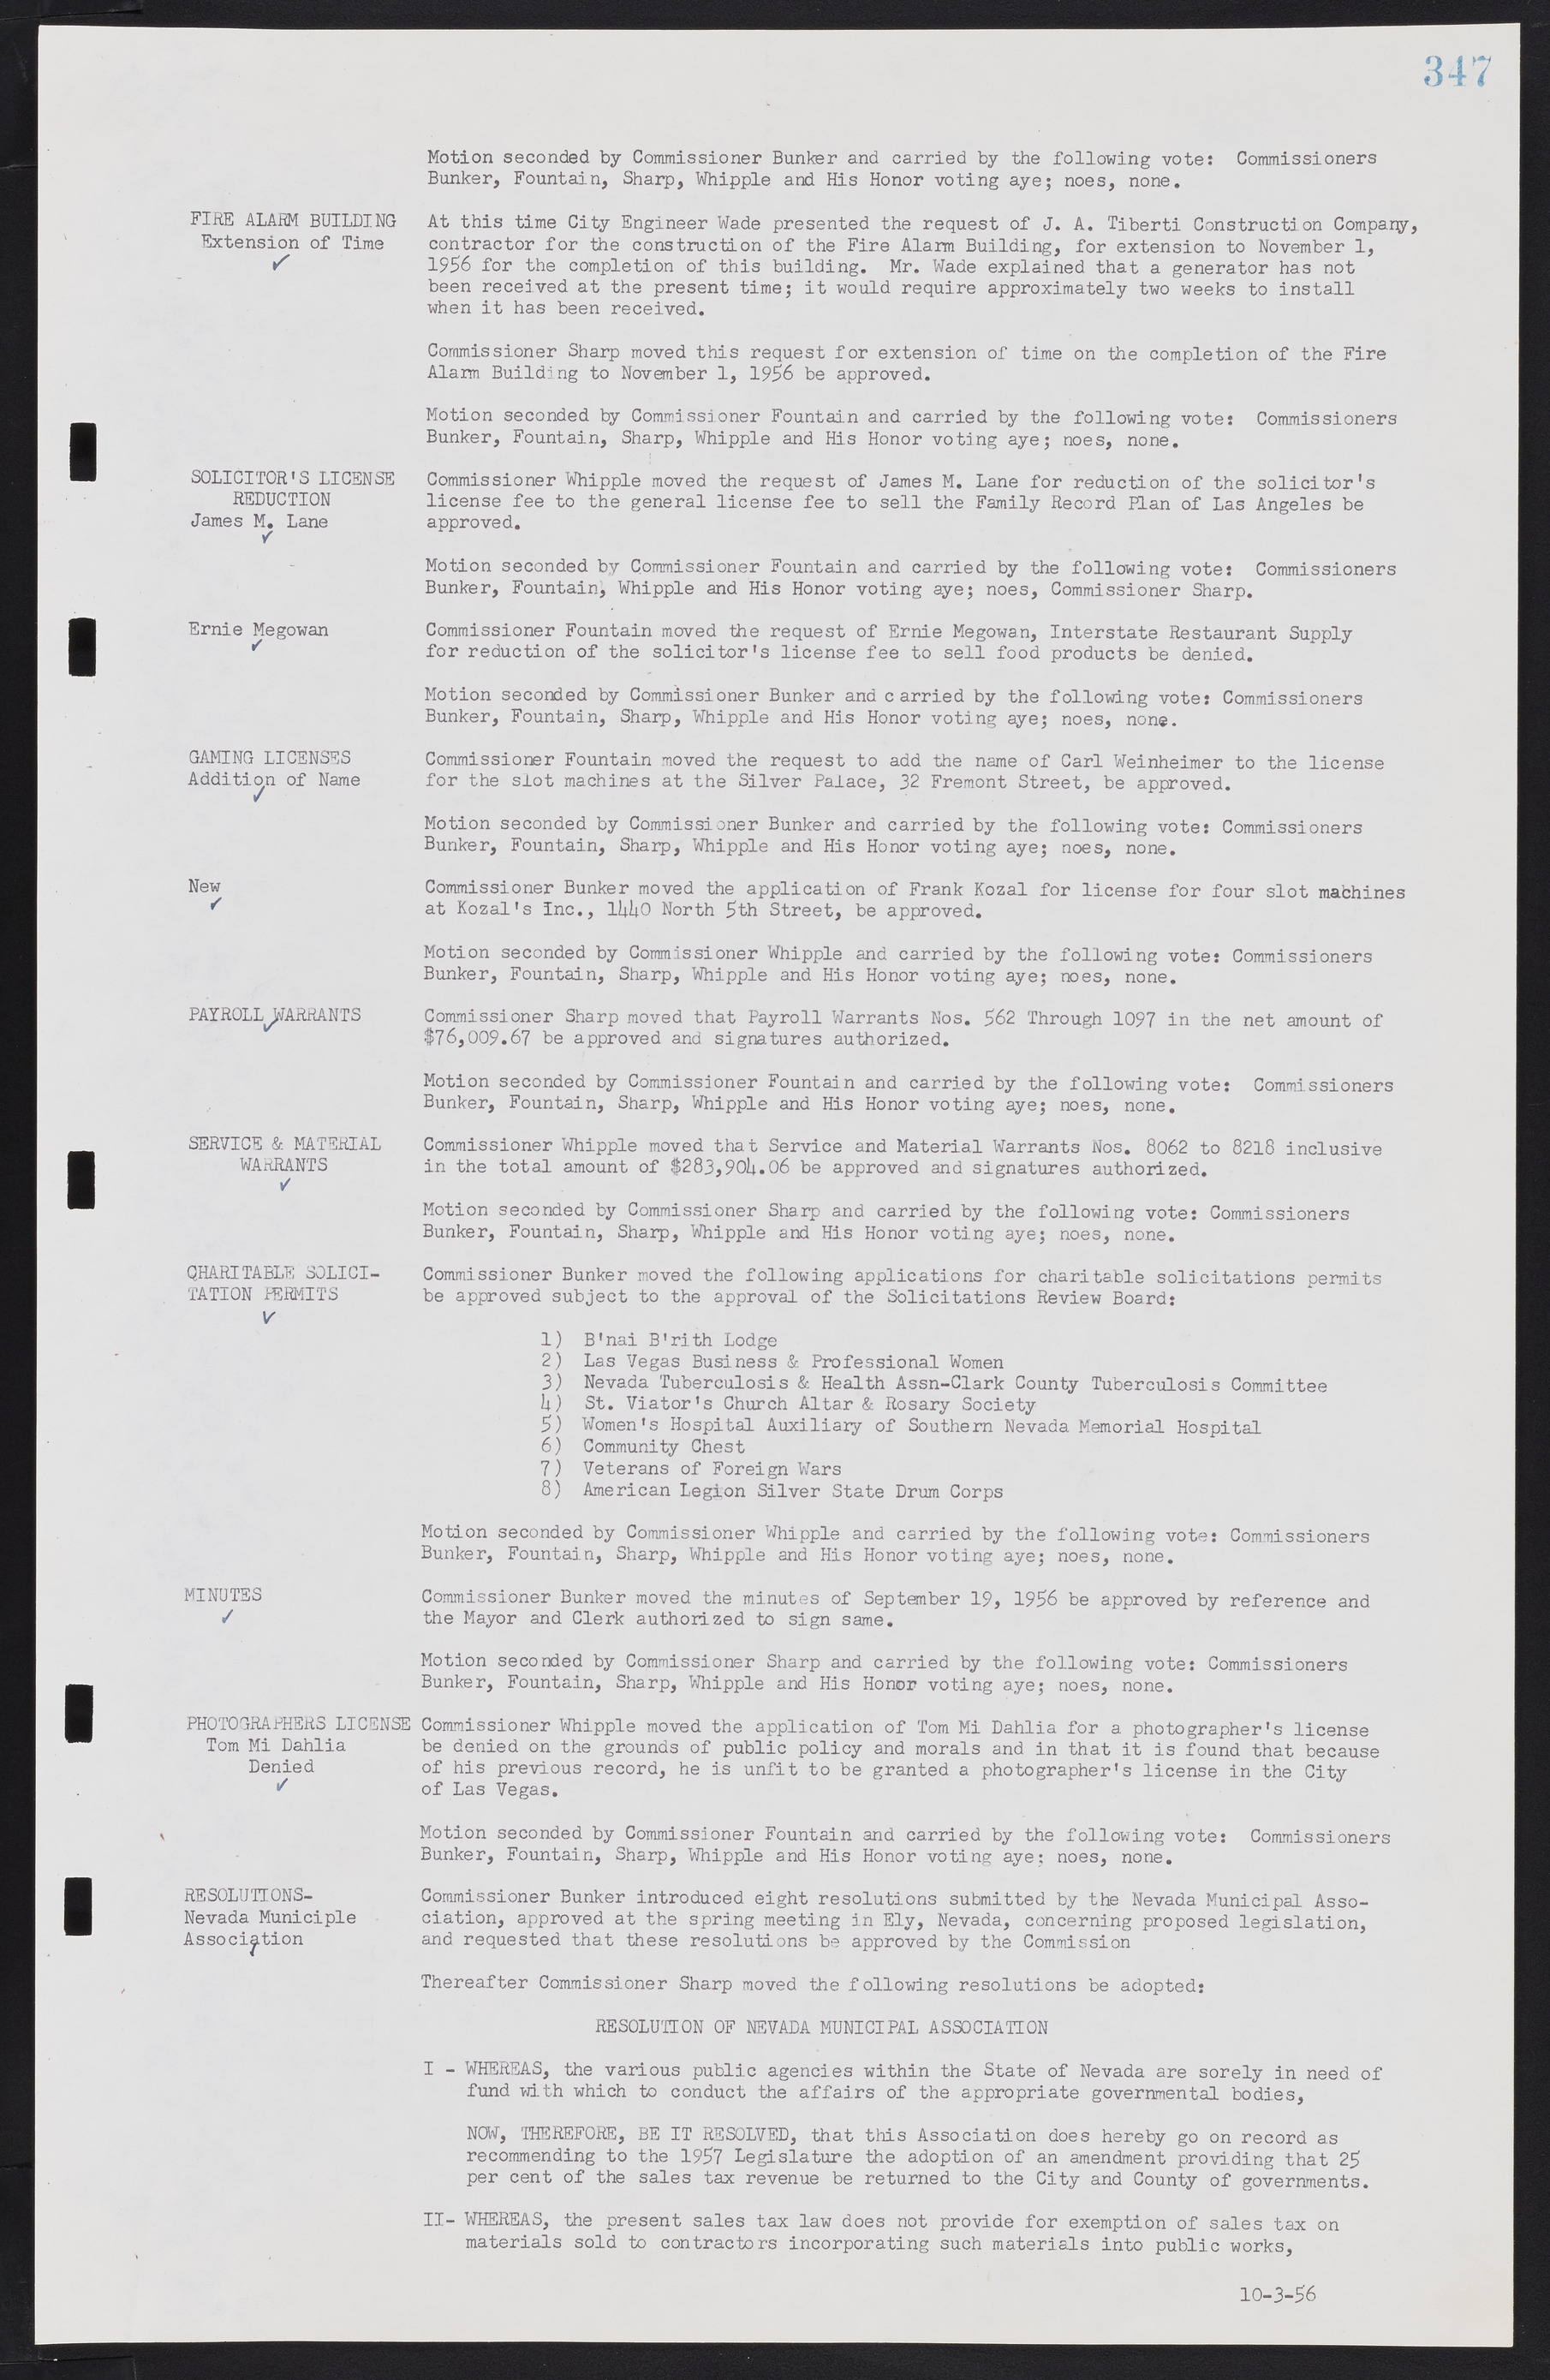 Las Vegas City Commission Minutes, September 21, 1955 to November 20, 1957, lvc000010-367